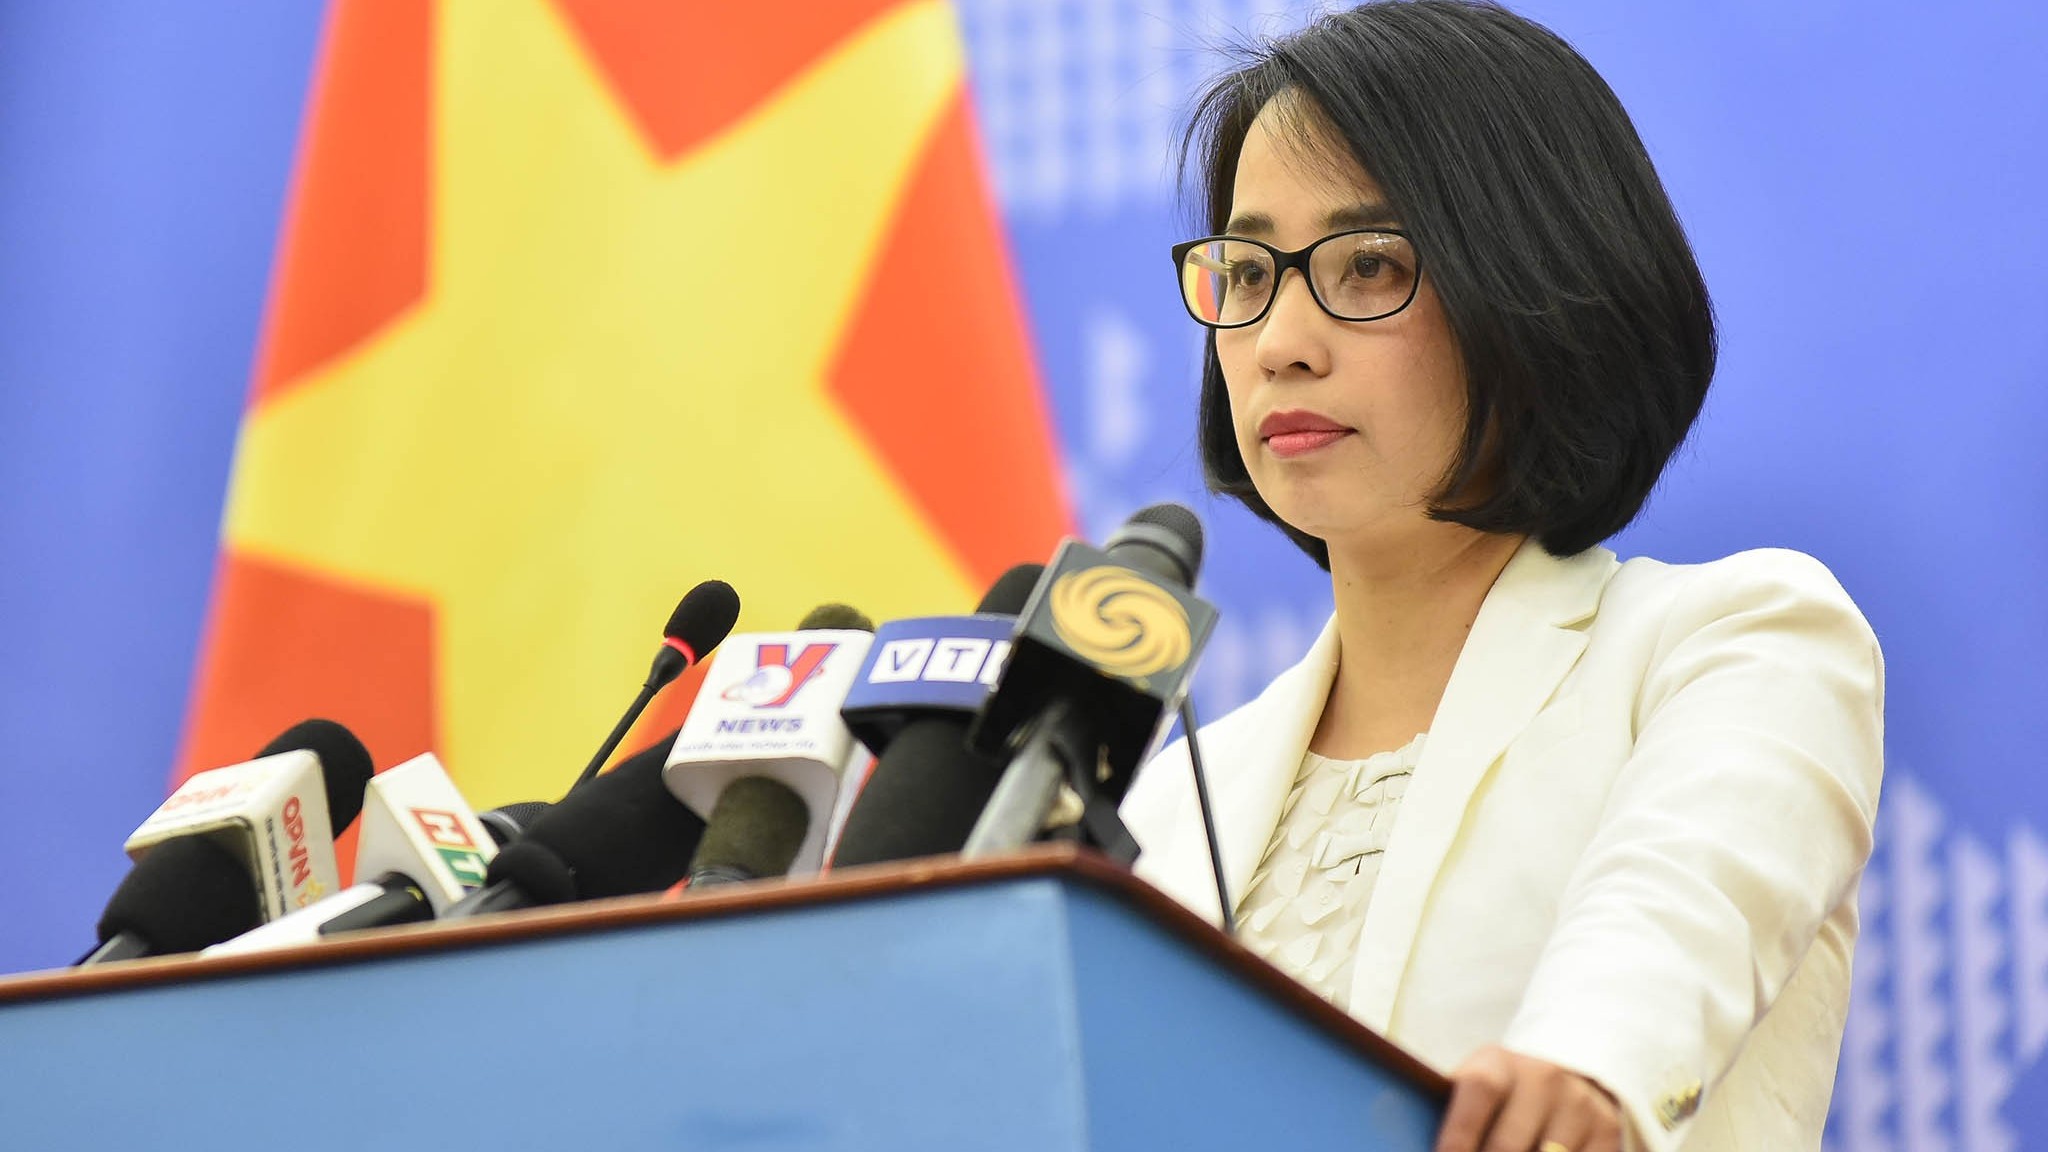 Viet Nam urges prompt investigation into Vietnamese woman’s death in Japan: Deputy Spokesperson